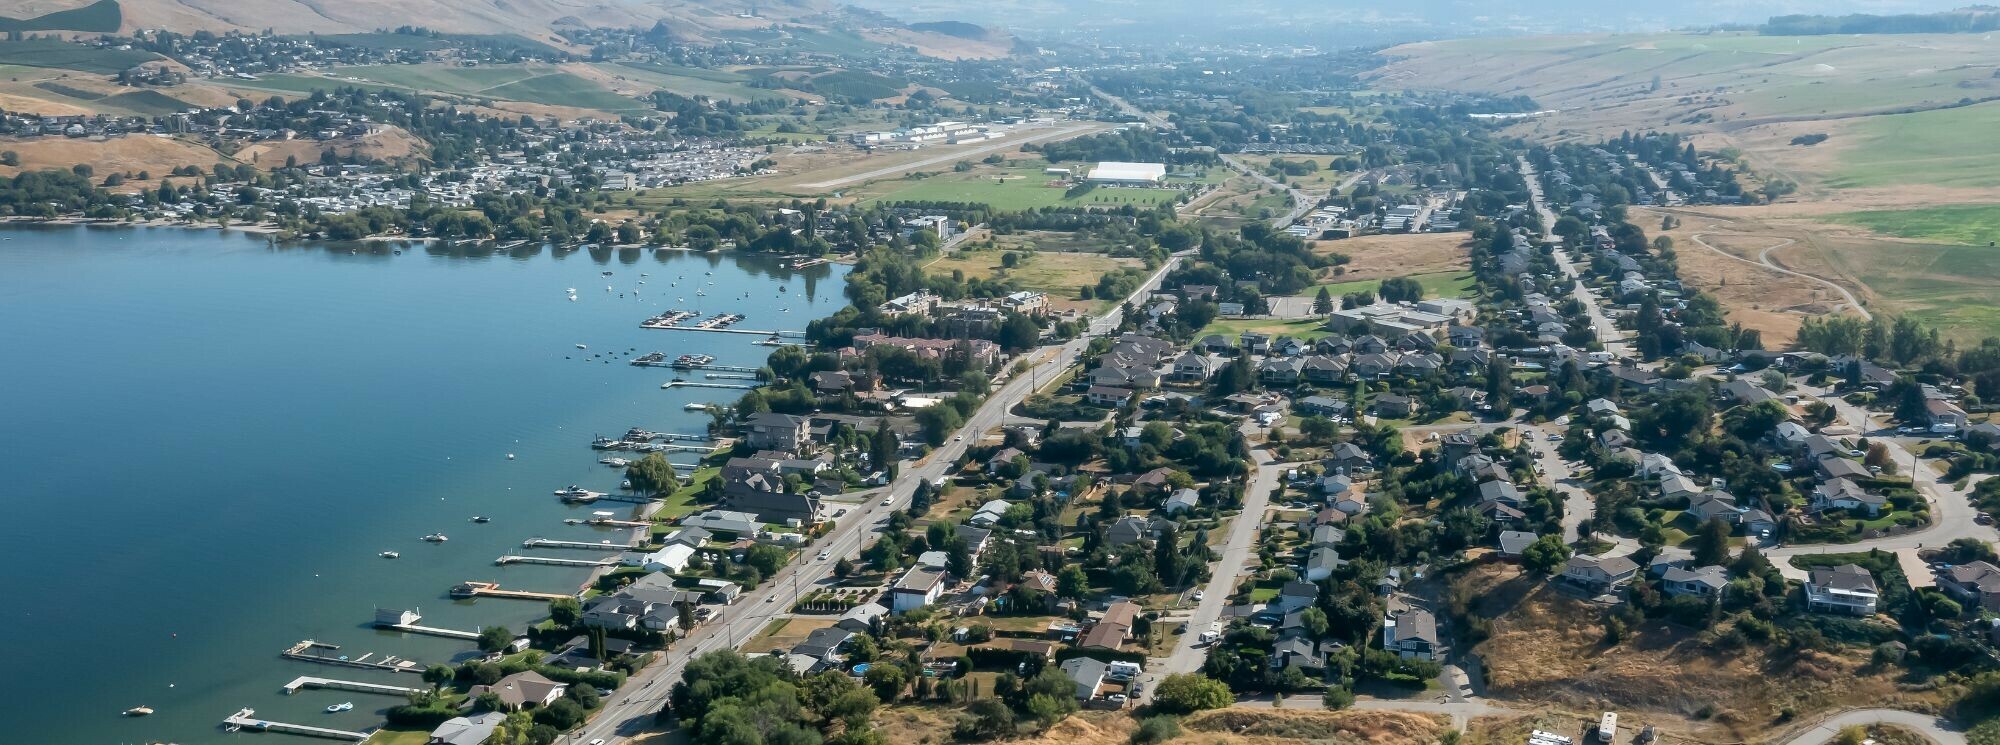 sailview banner - aerial photo